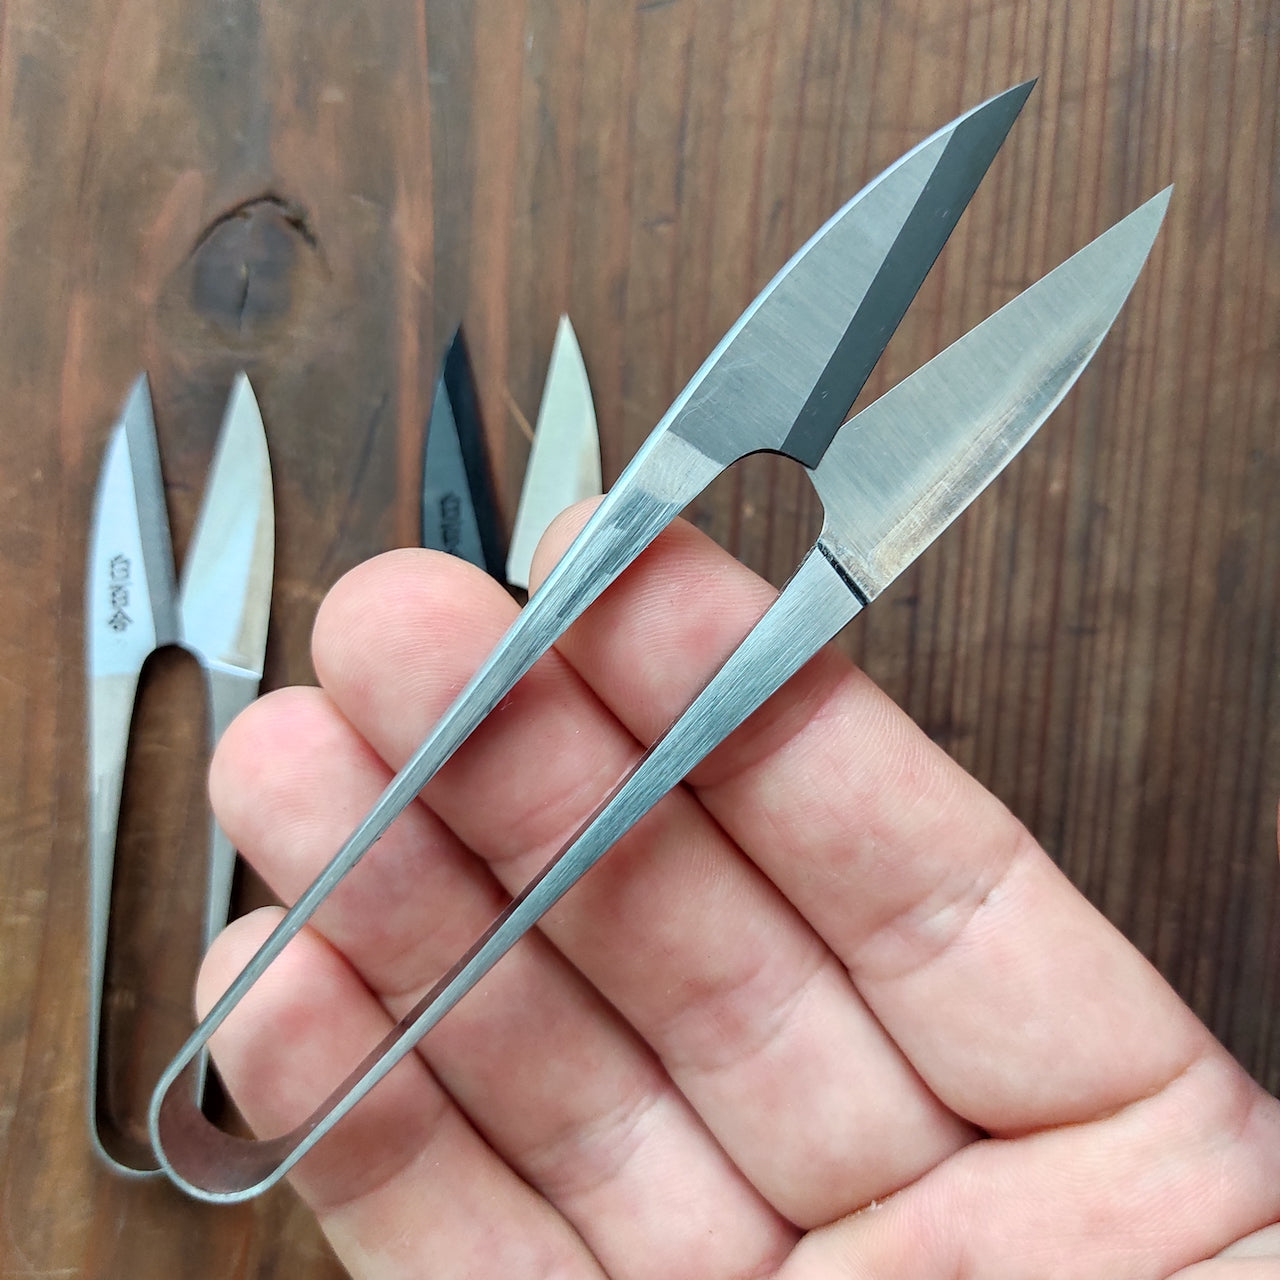 Thread scissors - L